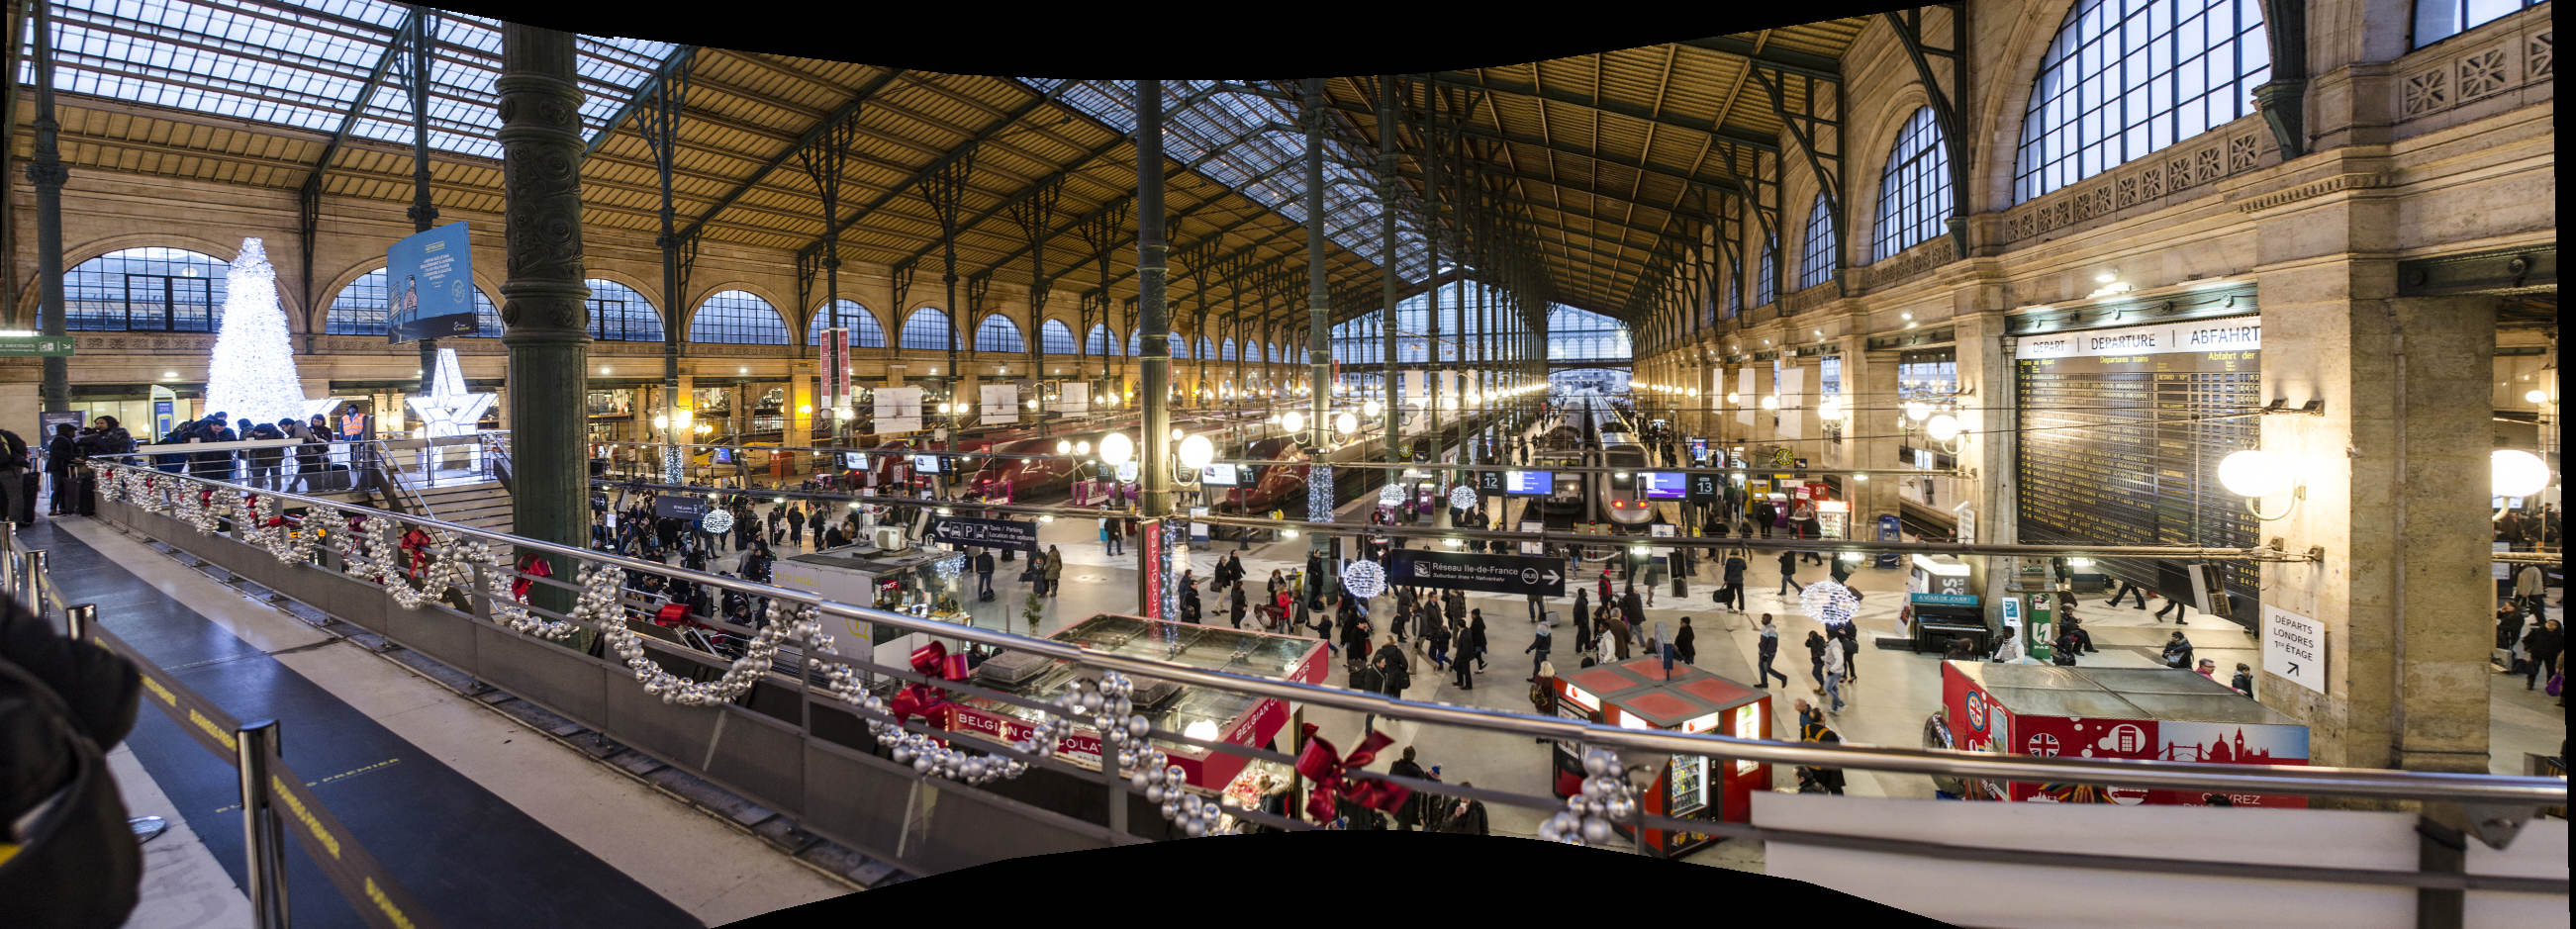 Gare Du Nord Train Station Paris By Train